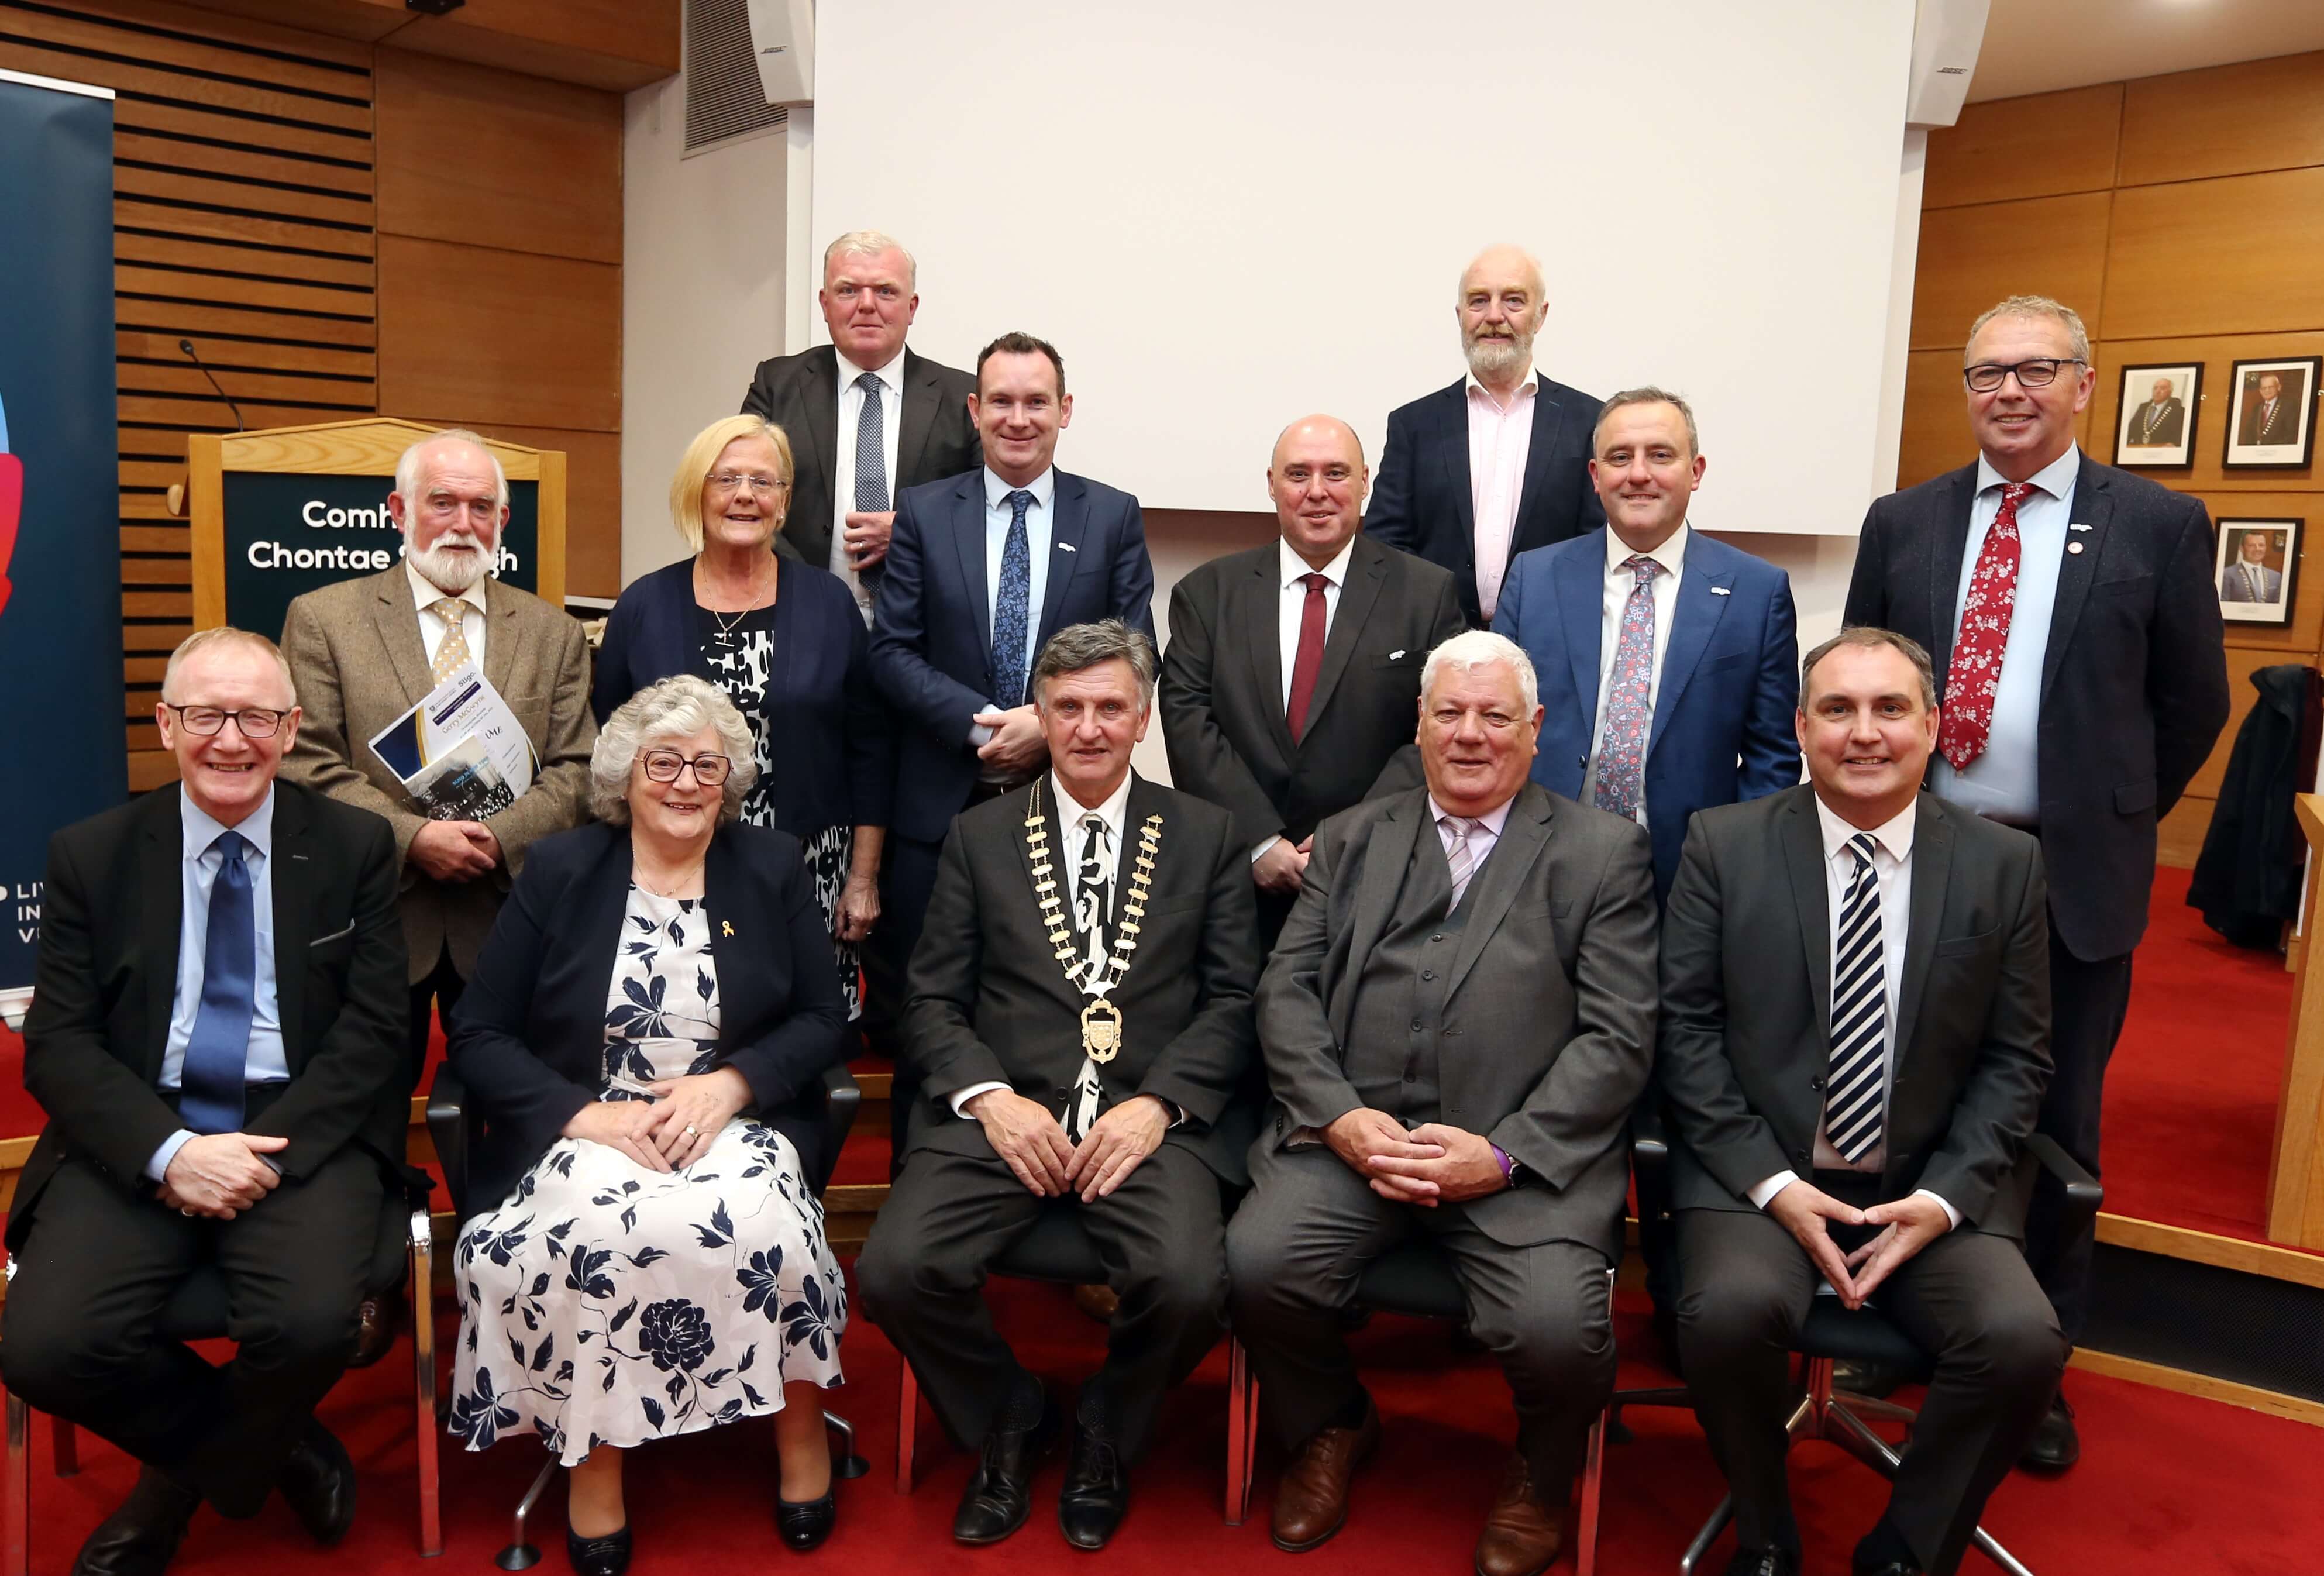 Gerry McGwyne honoured with Civic Reception